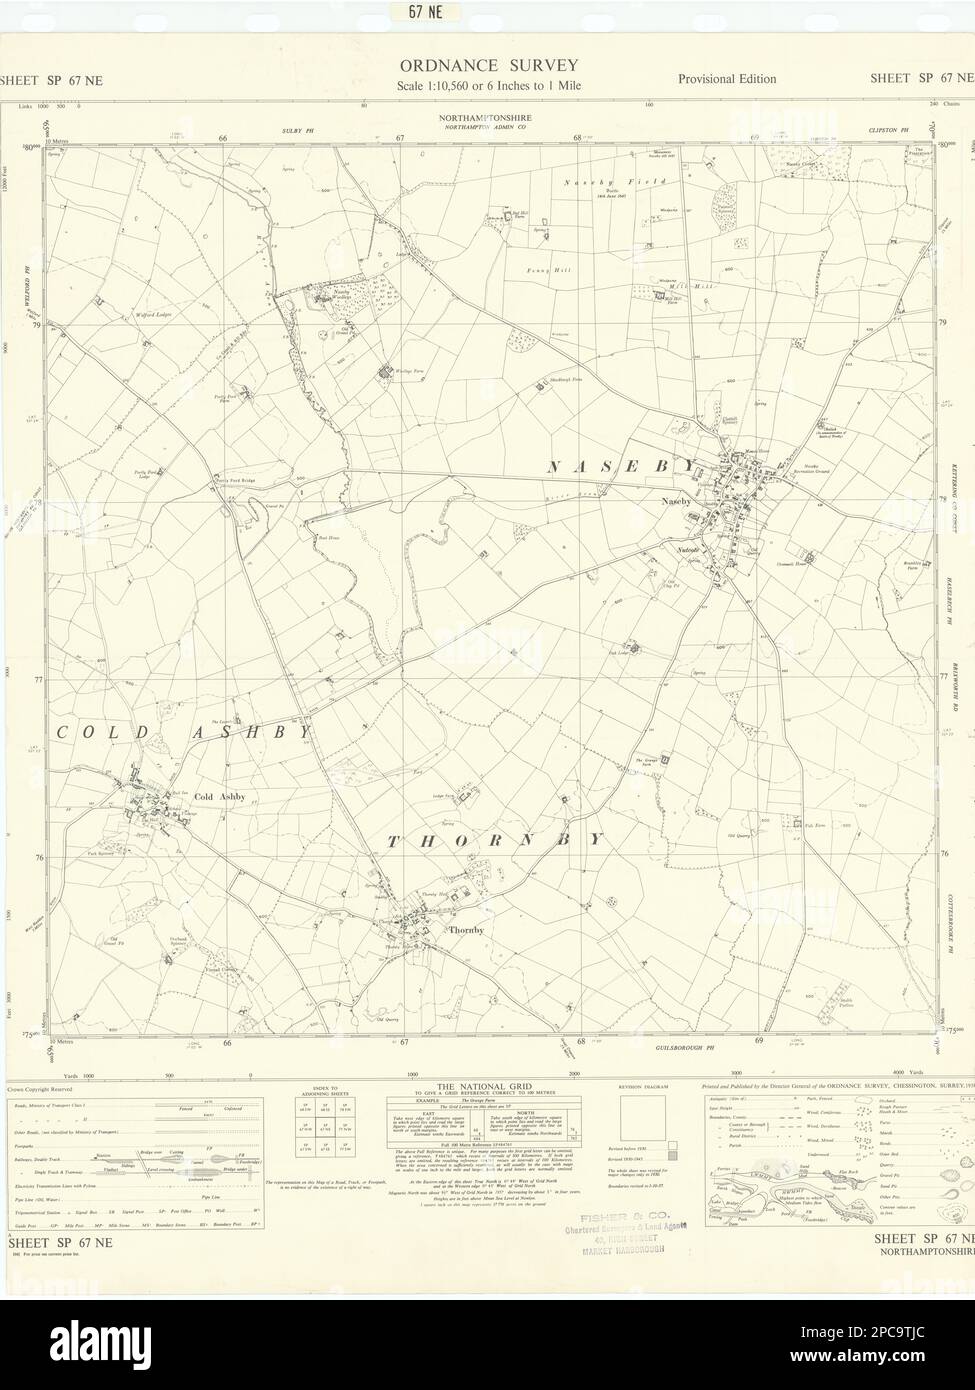 Hoja de estudio de ordnance SP67NE Northamptonshire Naseby Cold Ashby Thornby 1958 mapa Foto de stock